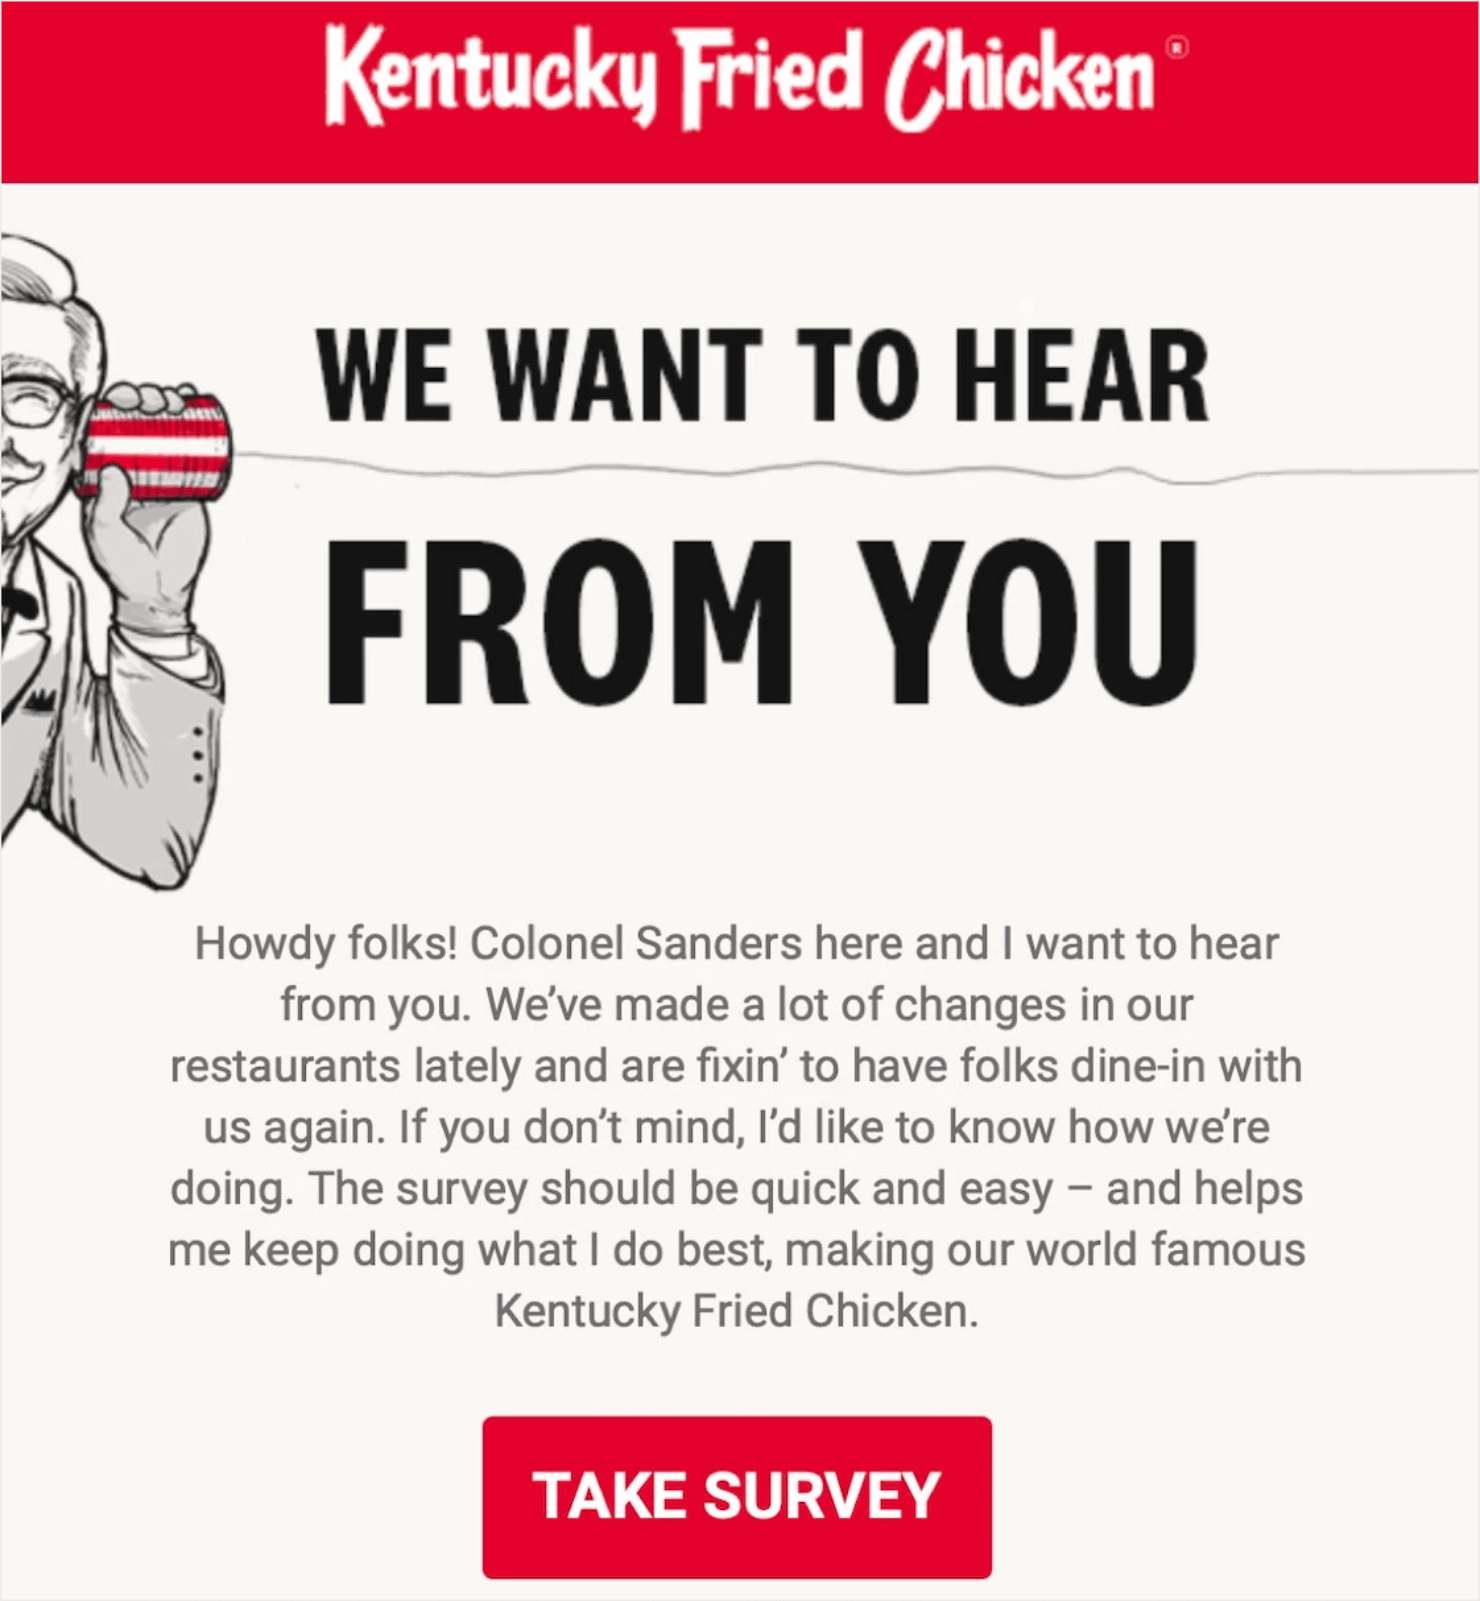 KFC email marketing